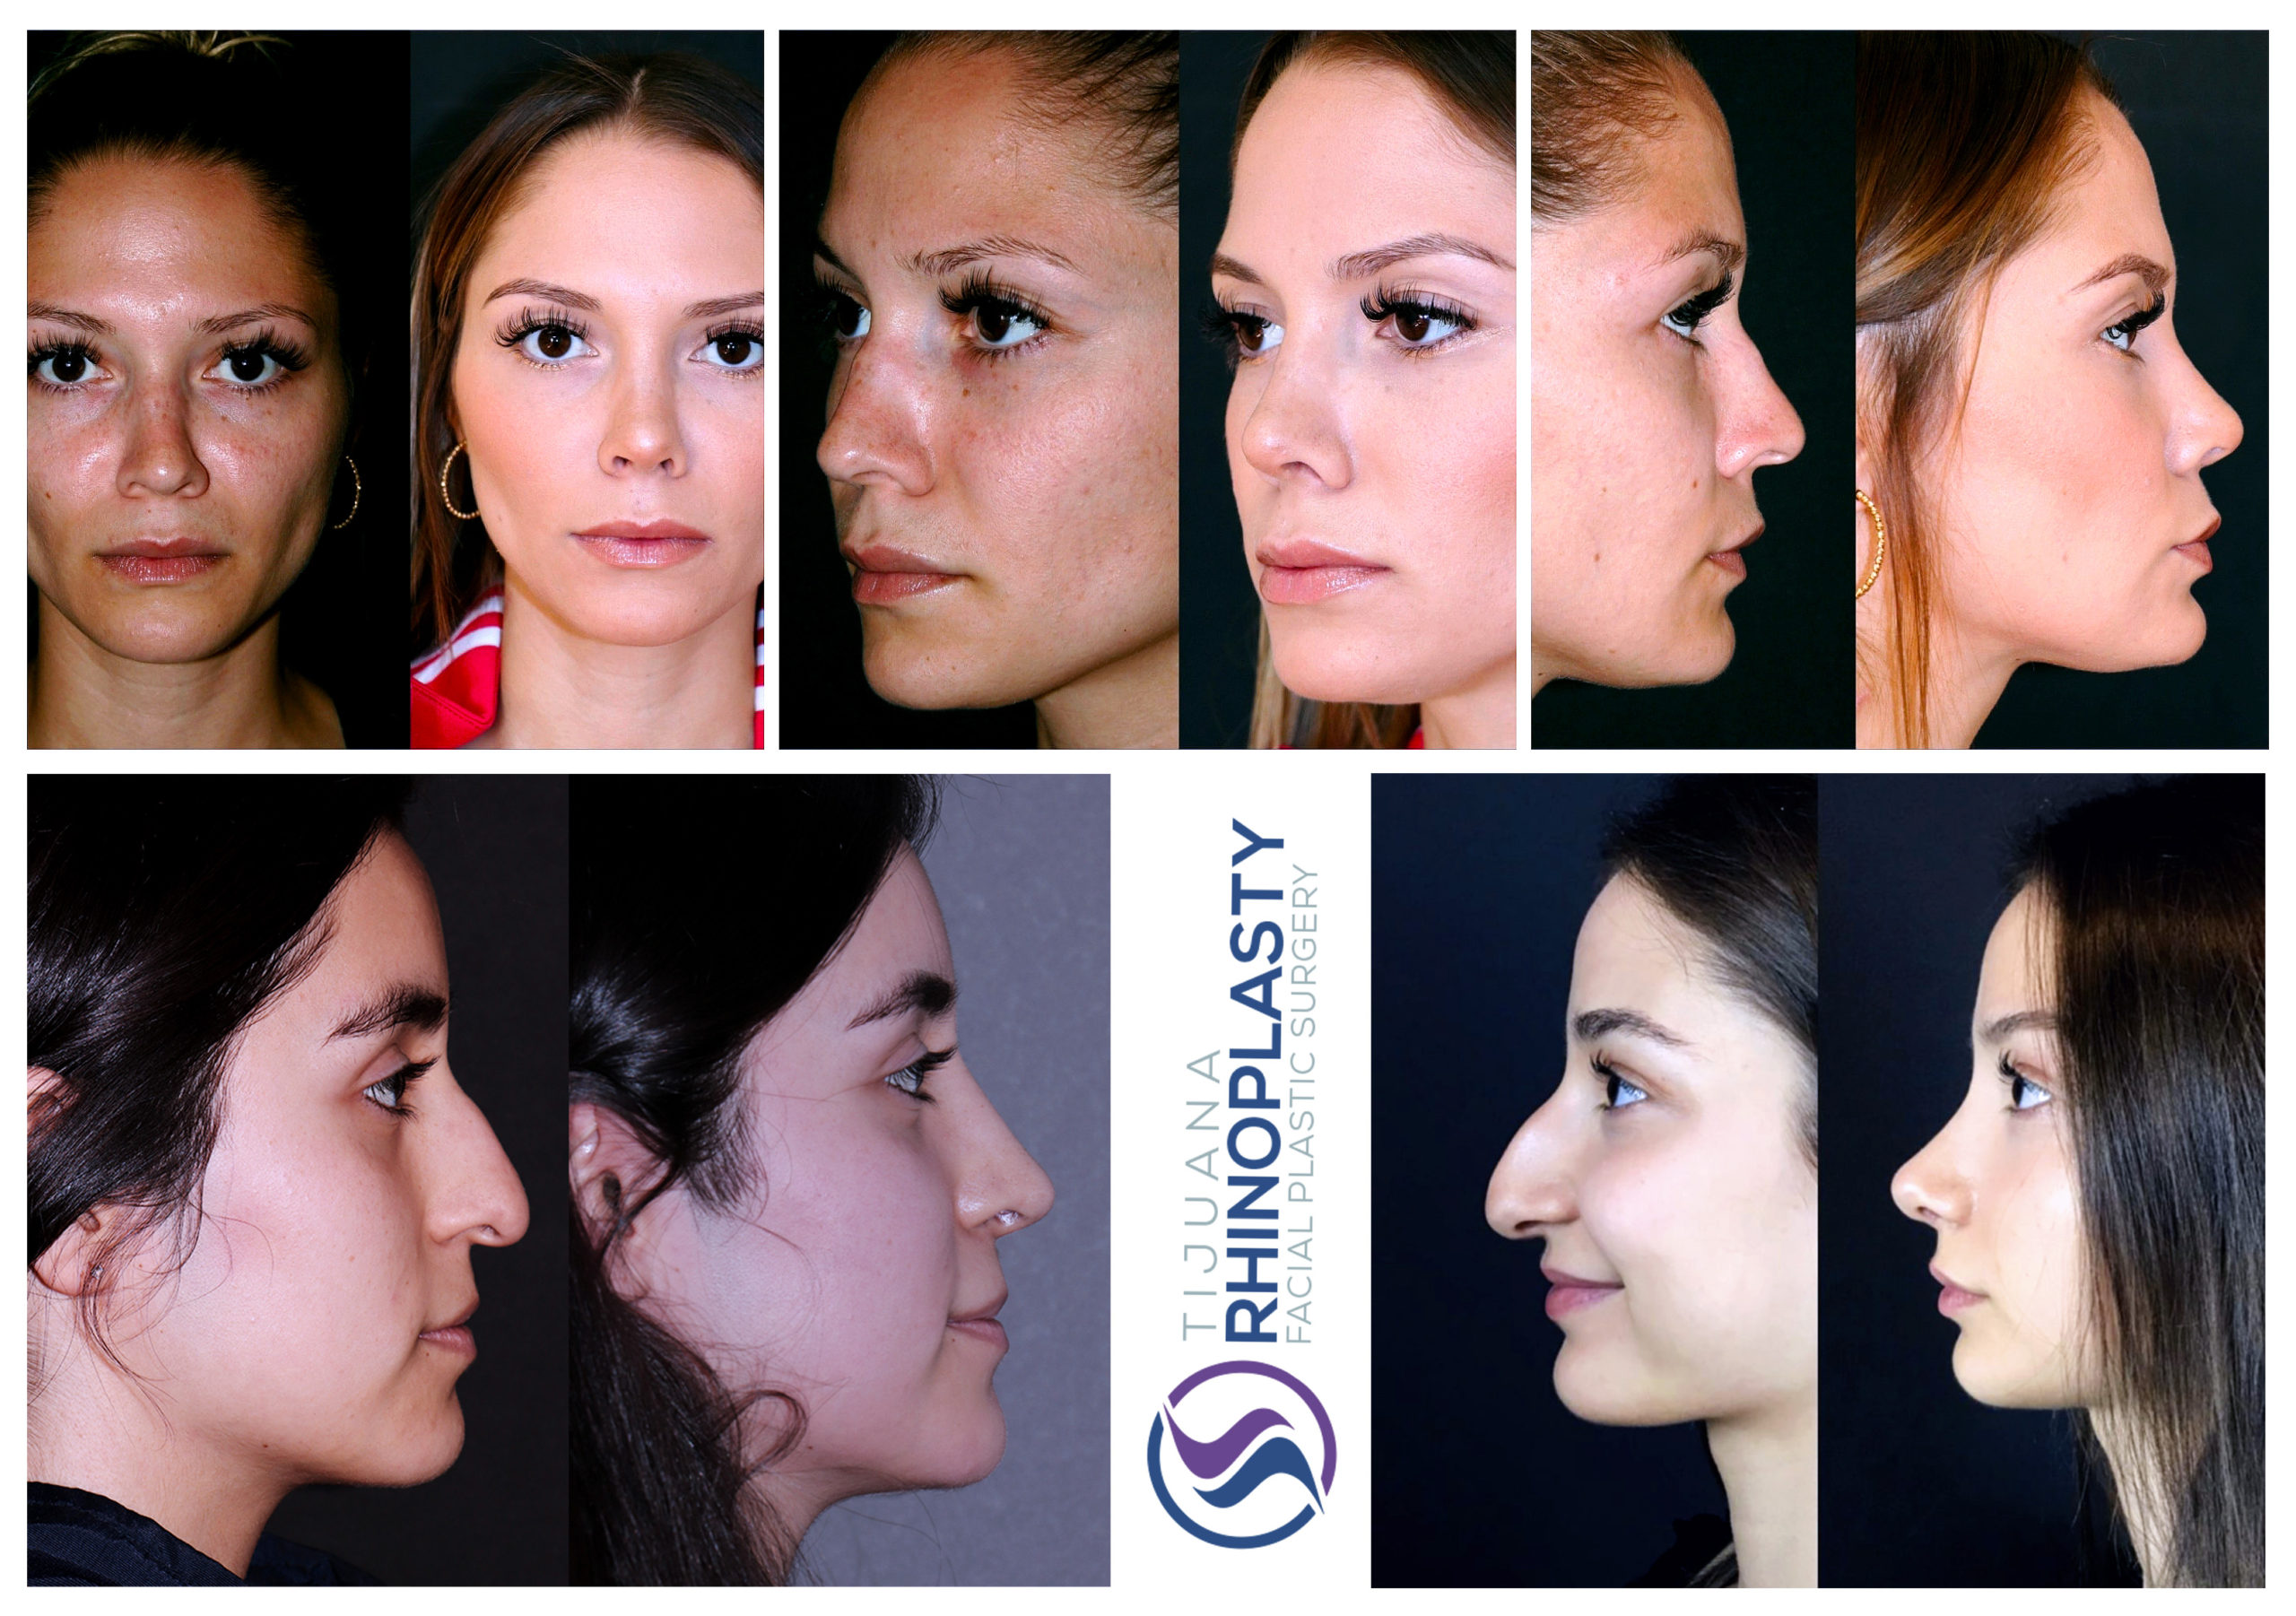 Rinoplastia antes y después. Resultados del Dr. Edgar Eduardo Santos de Rinoplastia Tijuana.